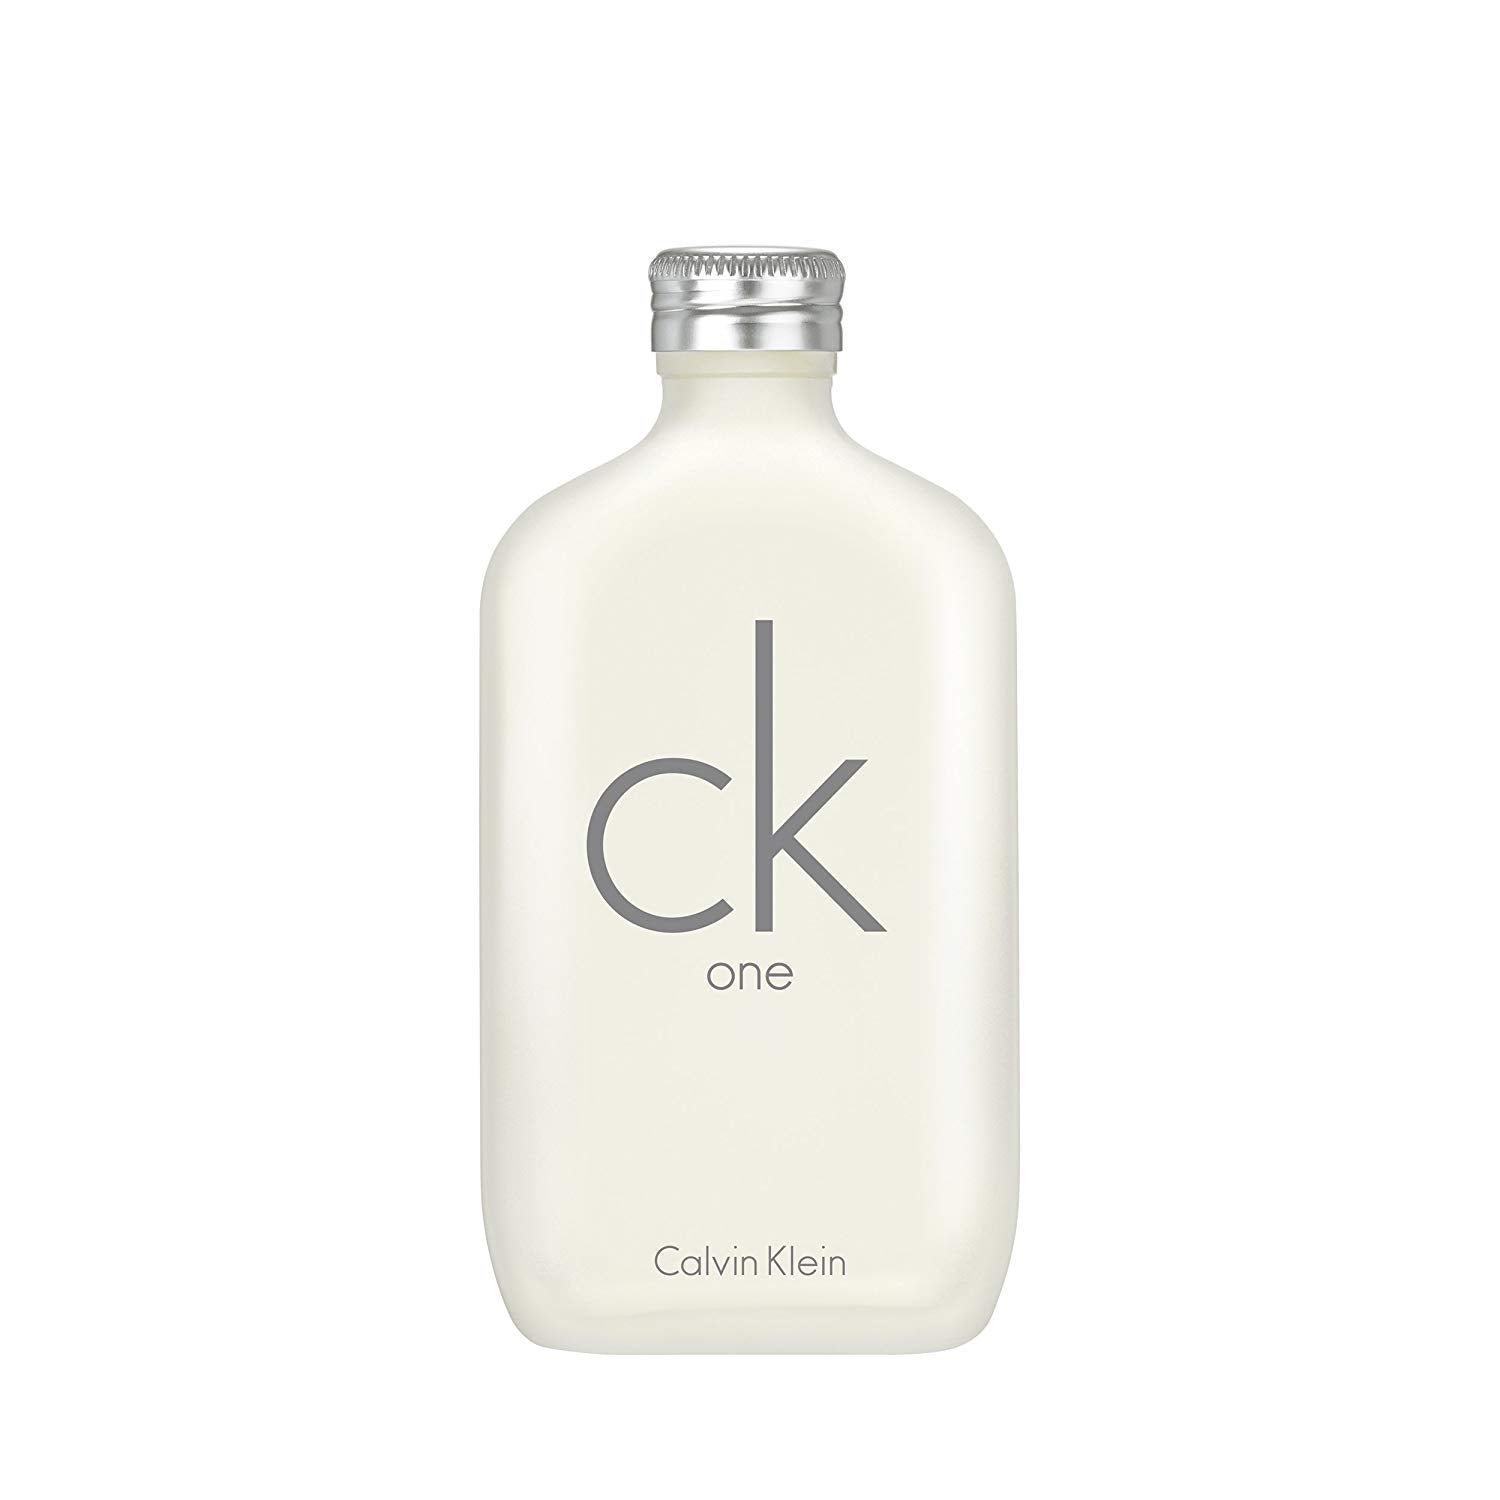 Perfume Unisex Calvin Klein CK One, 200ML EDT